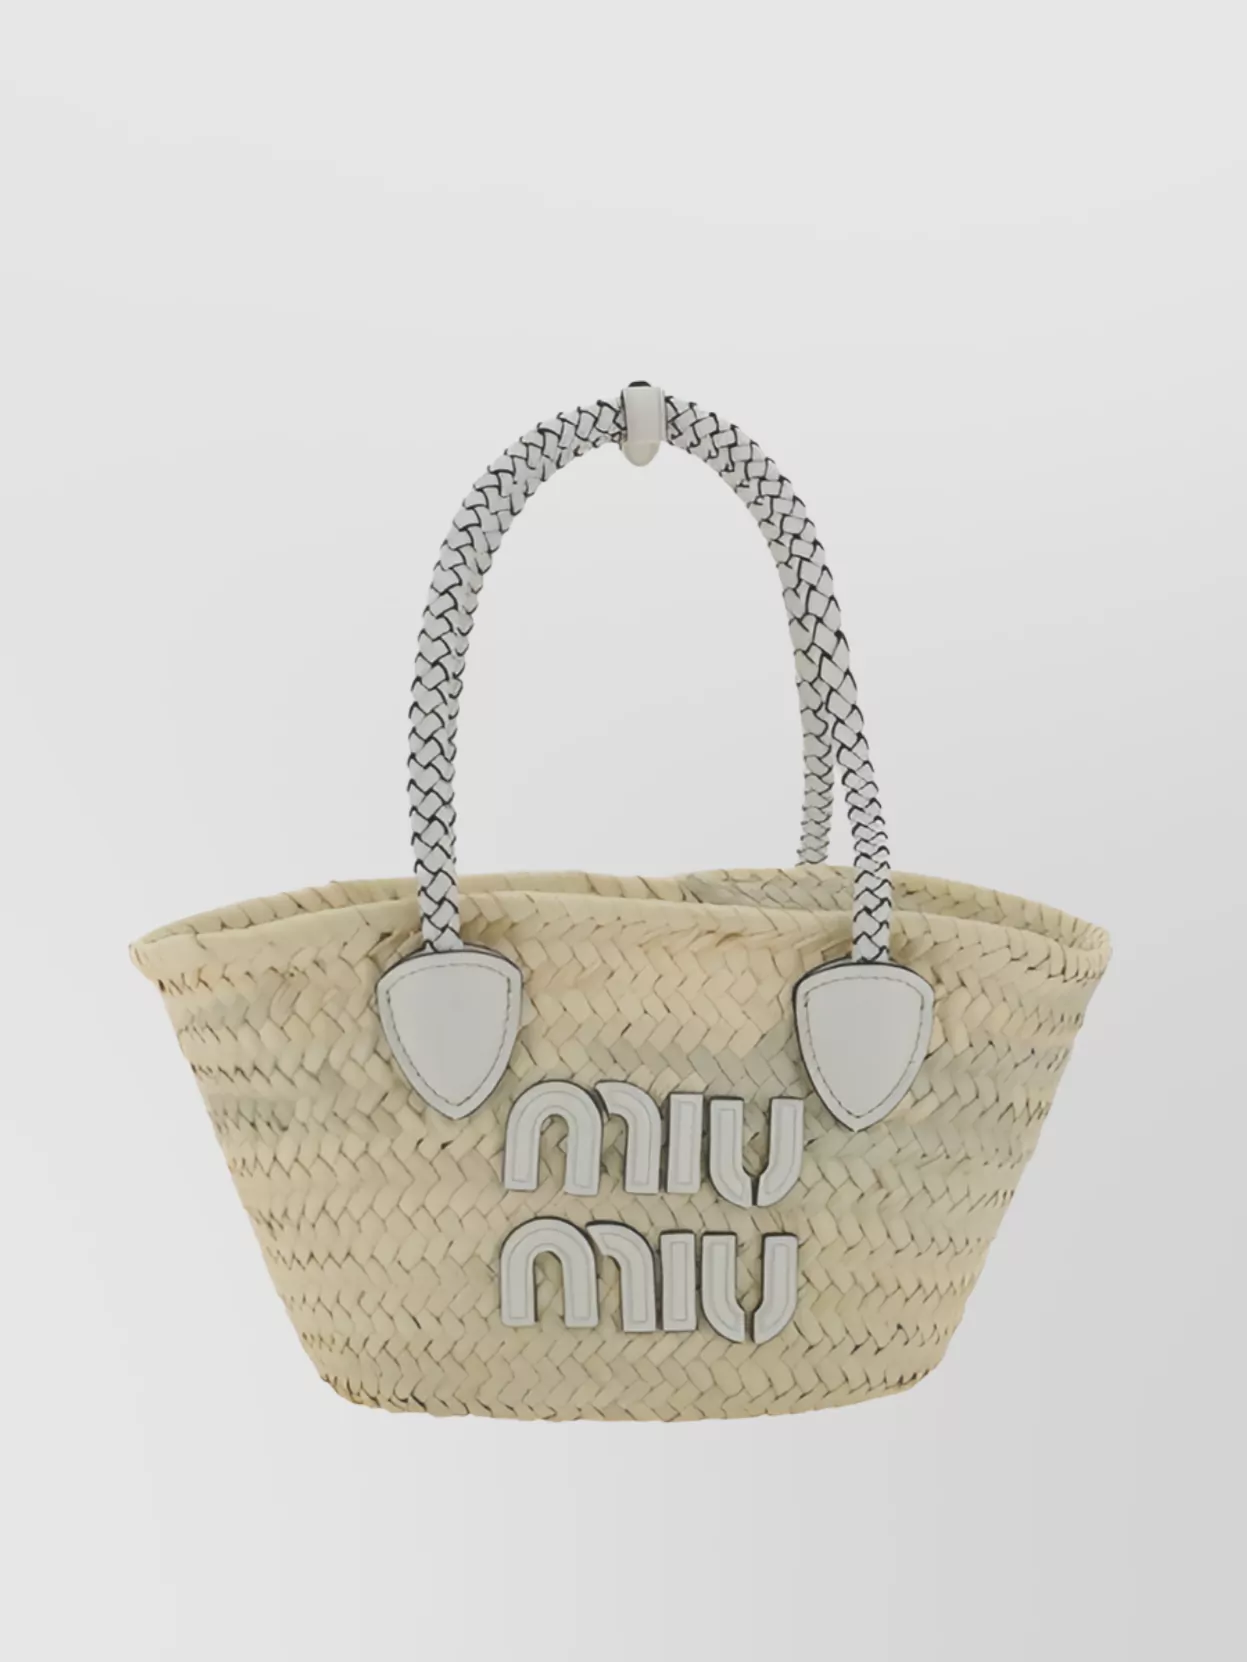 Miu Miu Woven Raffia Tote Bag With Leather Accents